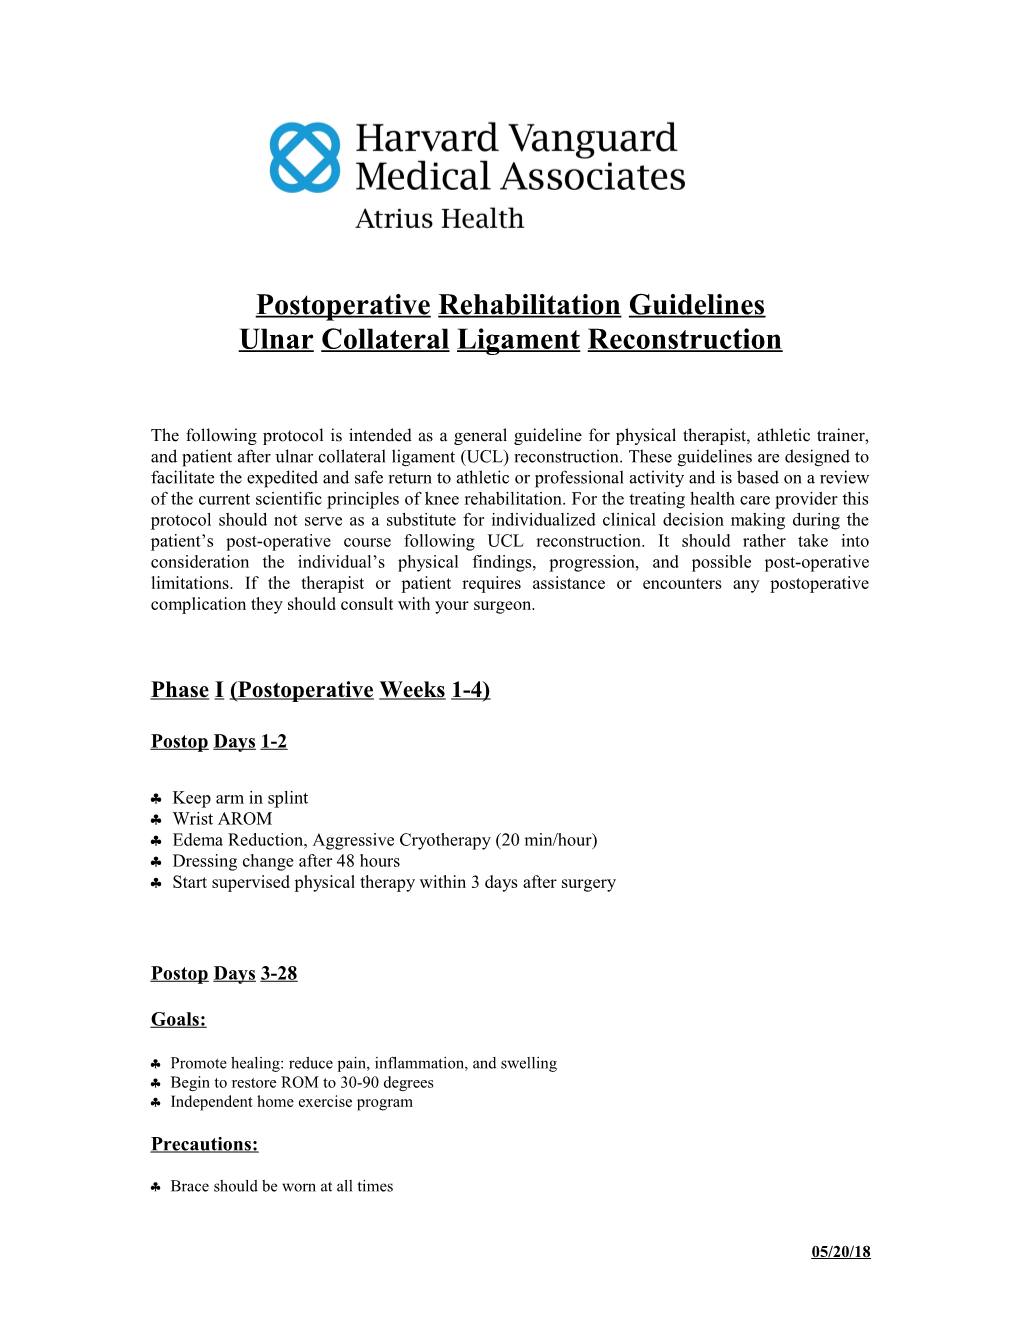 Postoperative Rehabilitation Protocol: UCL Reconstruction